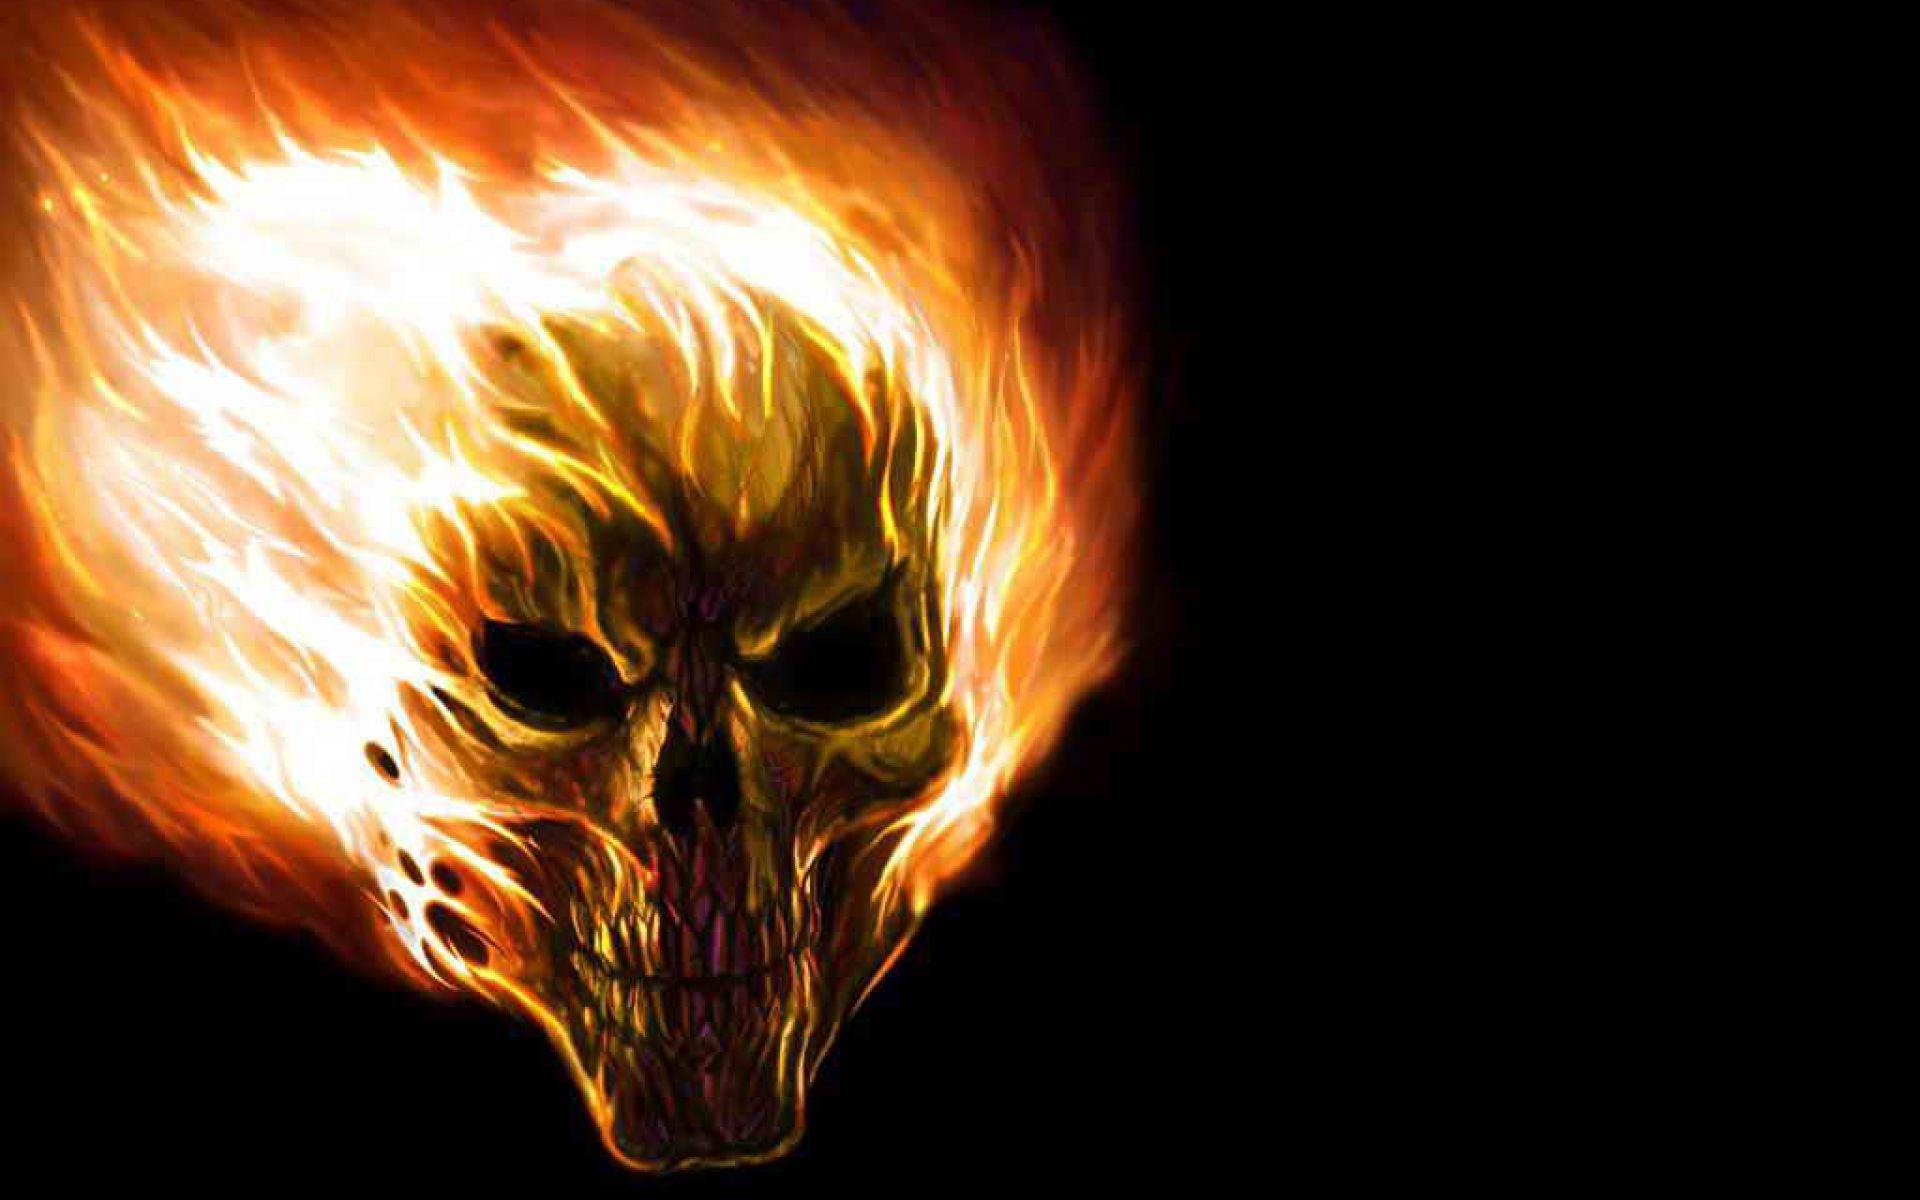 Flaming Skull Wallpapers 4k Hd Flaming Skull Backgrounds On ...